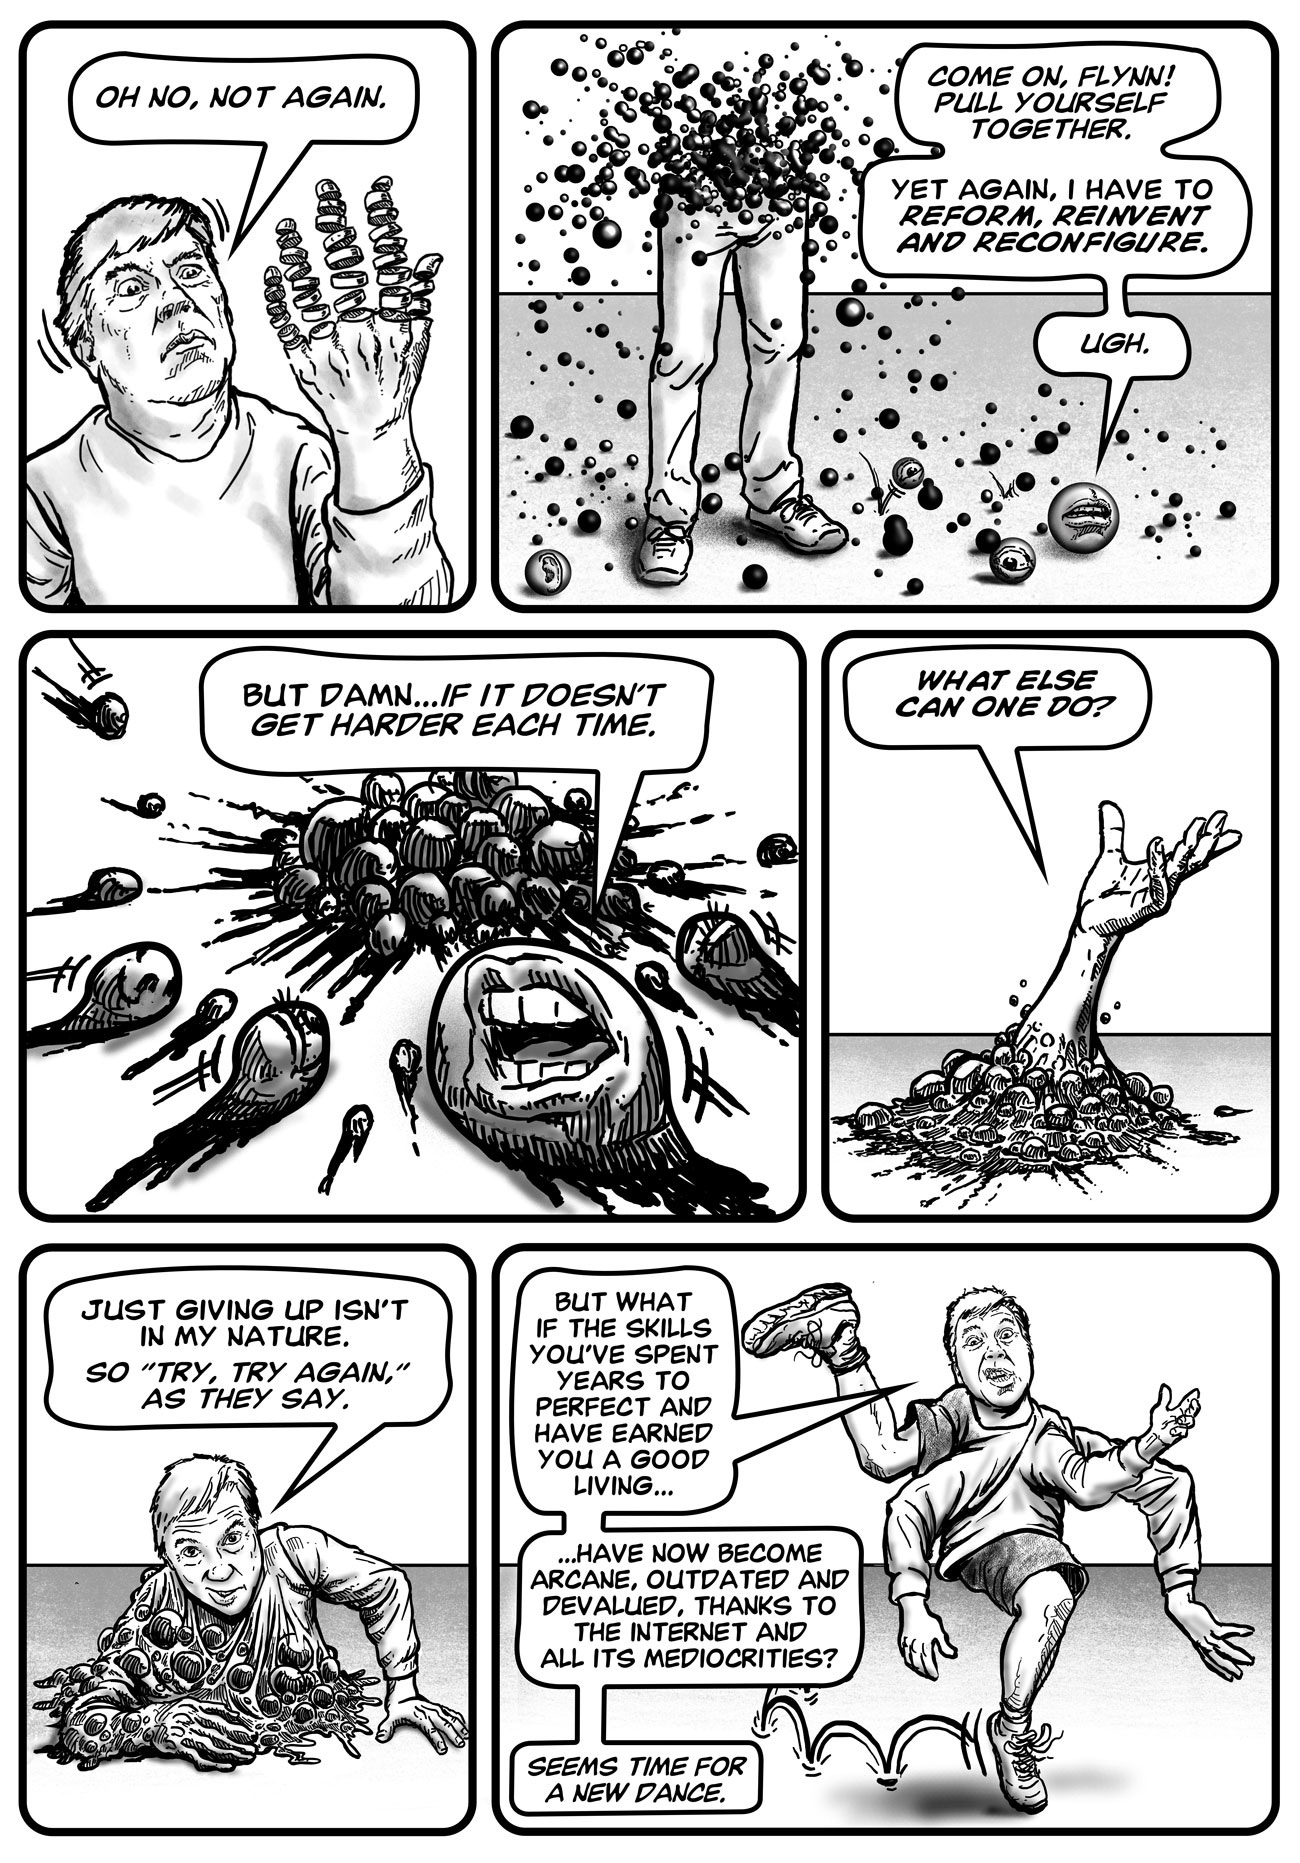 Crackingup page 1 comic by ER Flynn